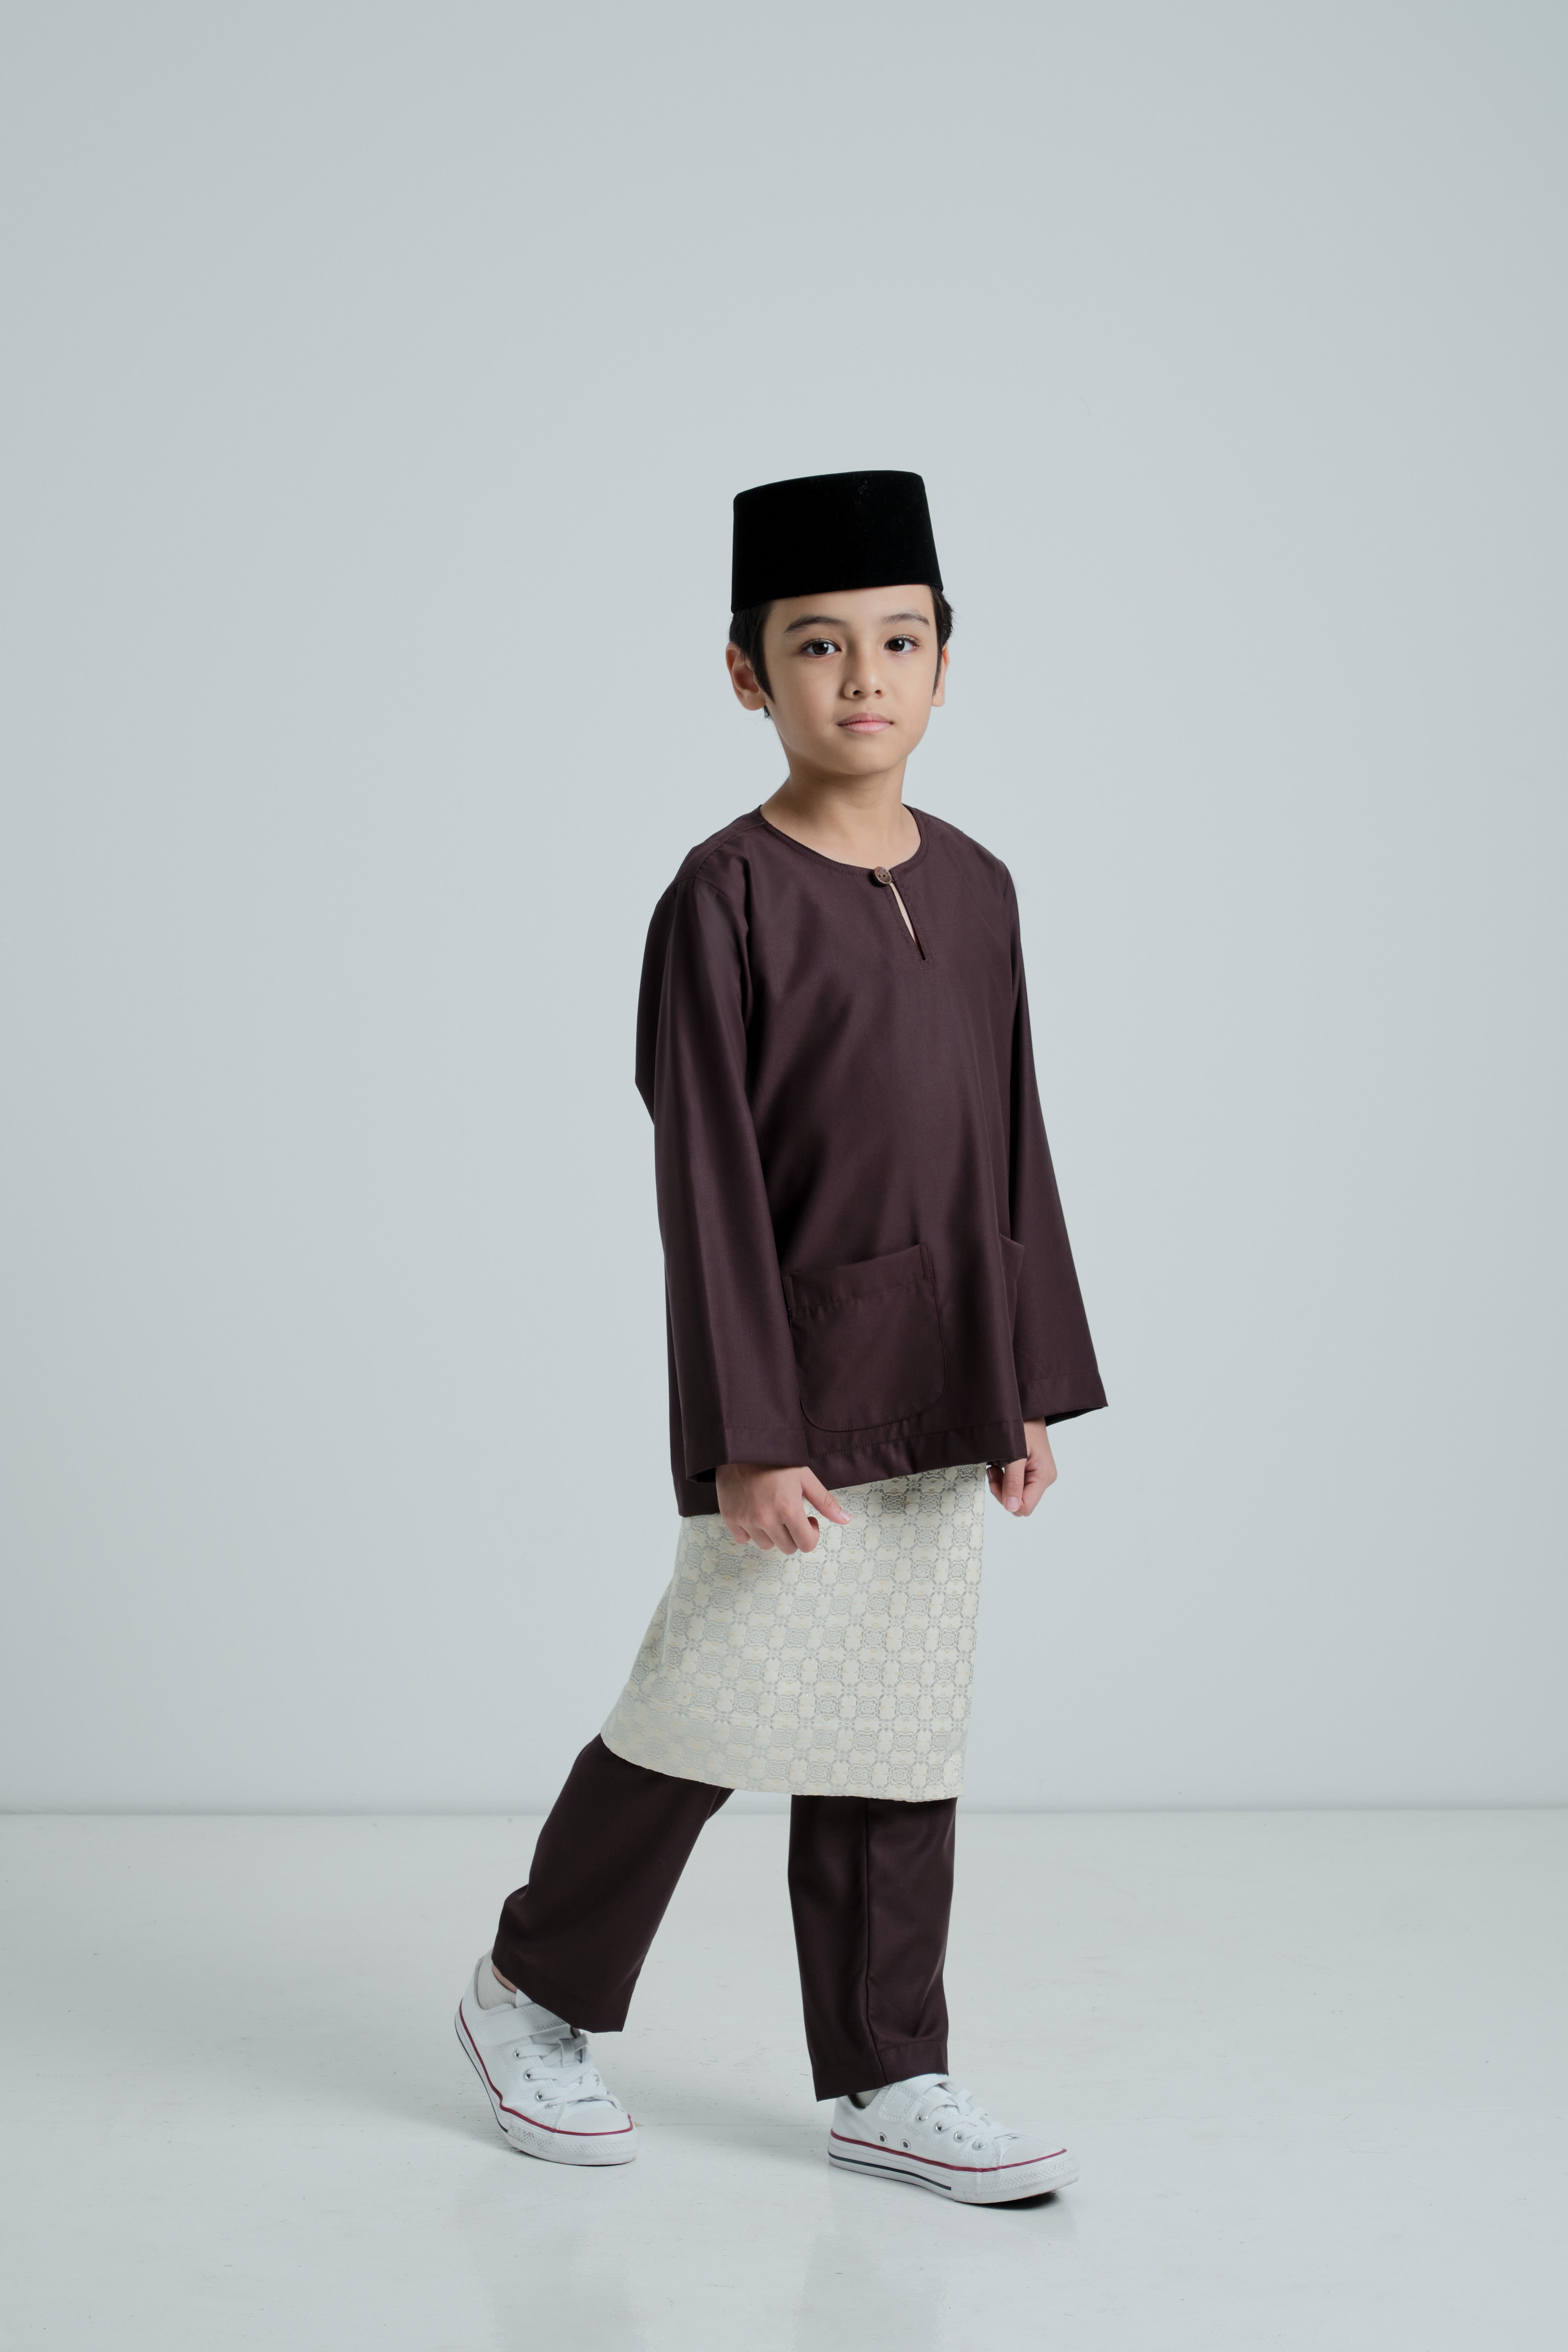 Patawali Boys Baju Melayu Teluk Belanga - Dark Chocolate